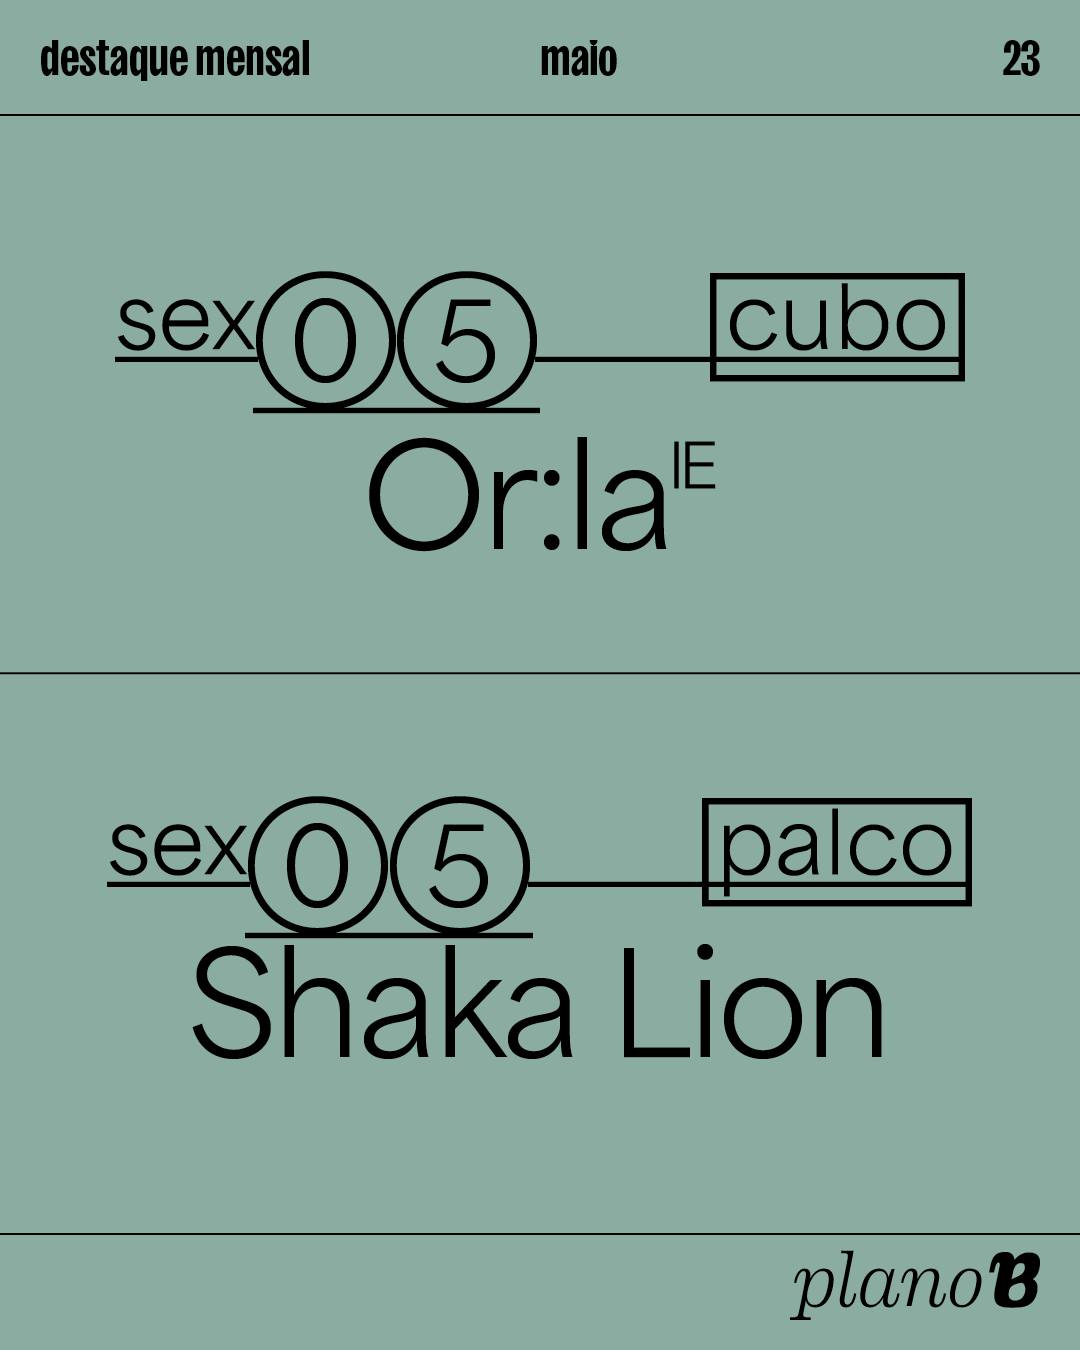 Or:la - Shaka Lion - Plano B